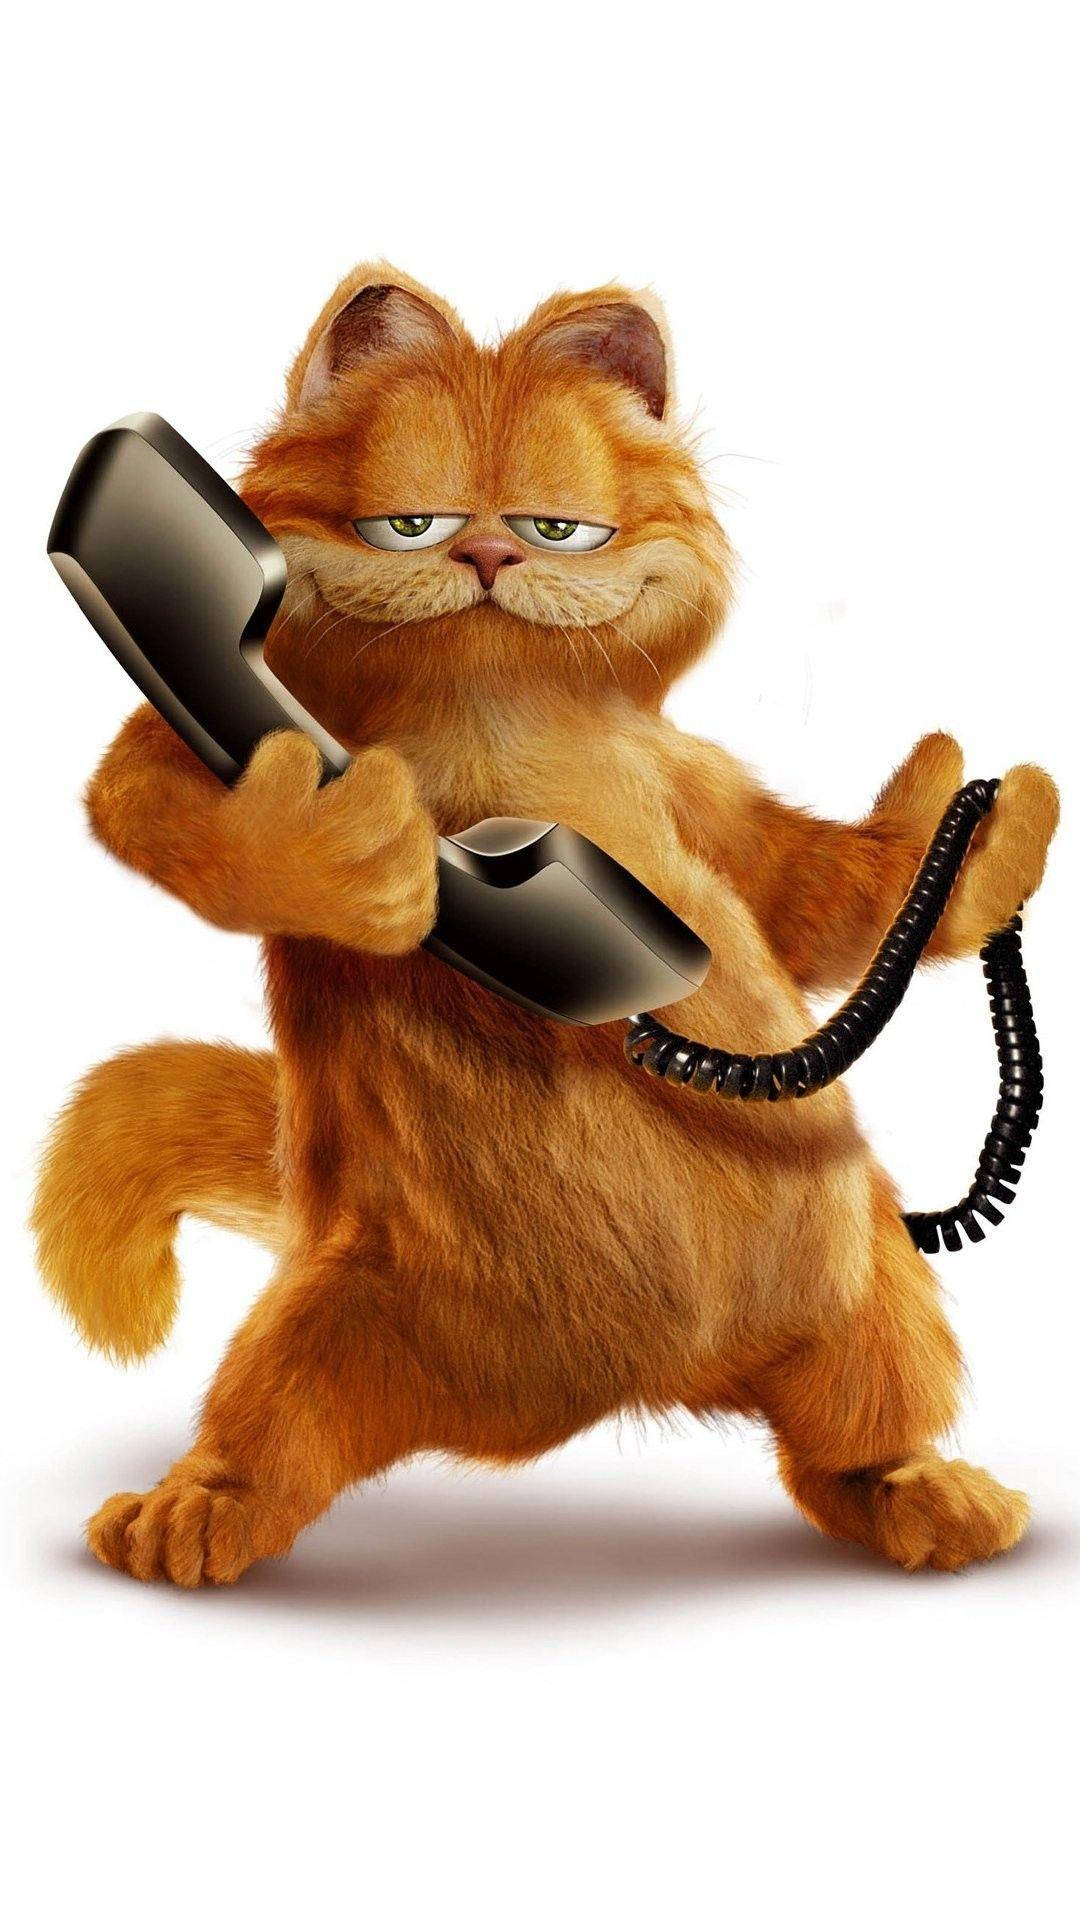 Telephone Call With Garfield Wallpaper